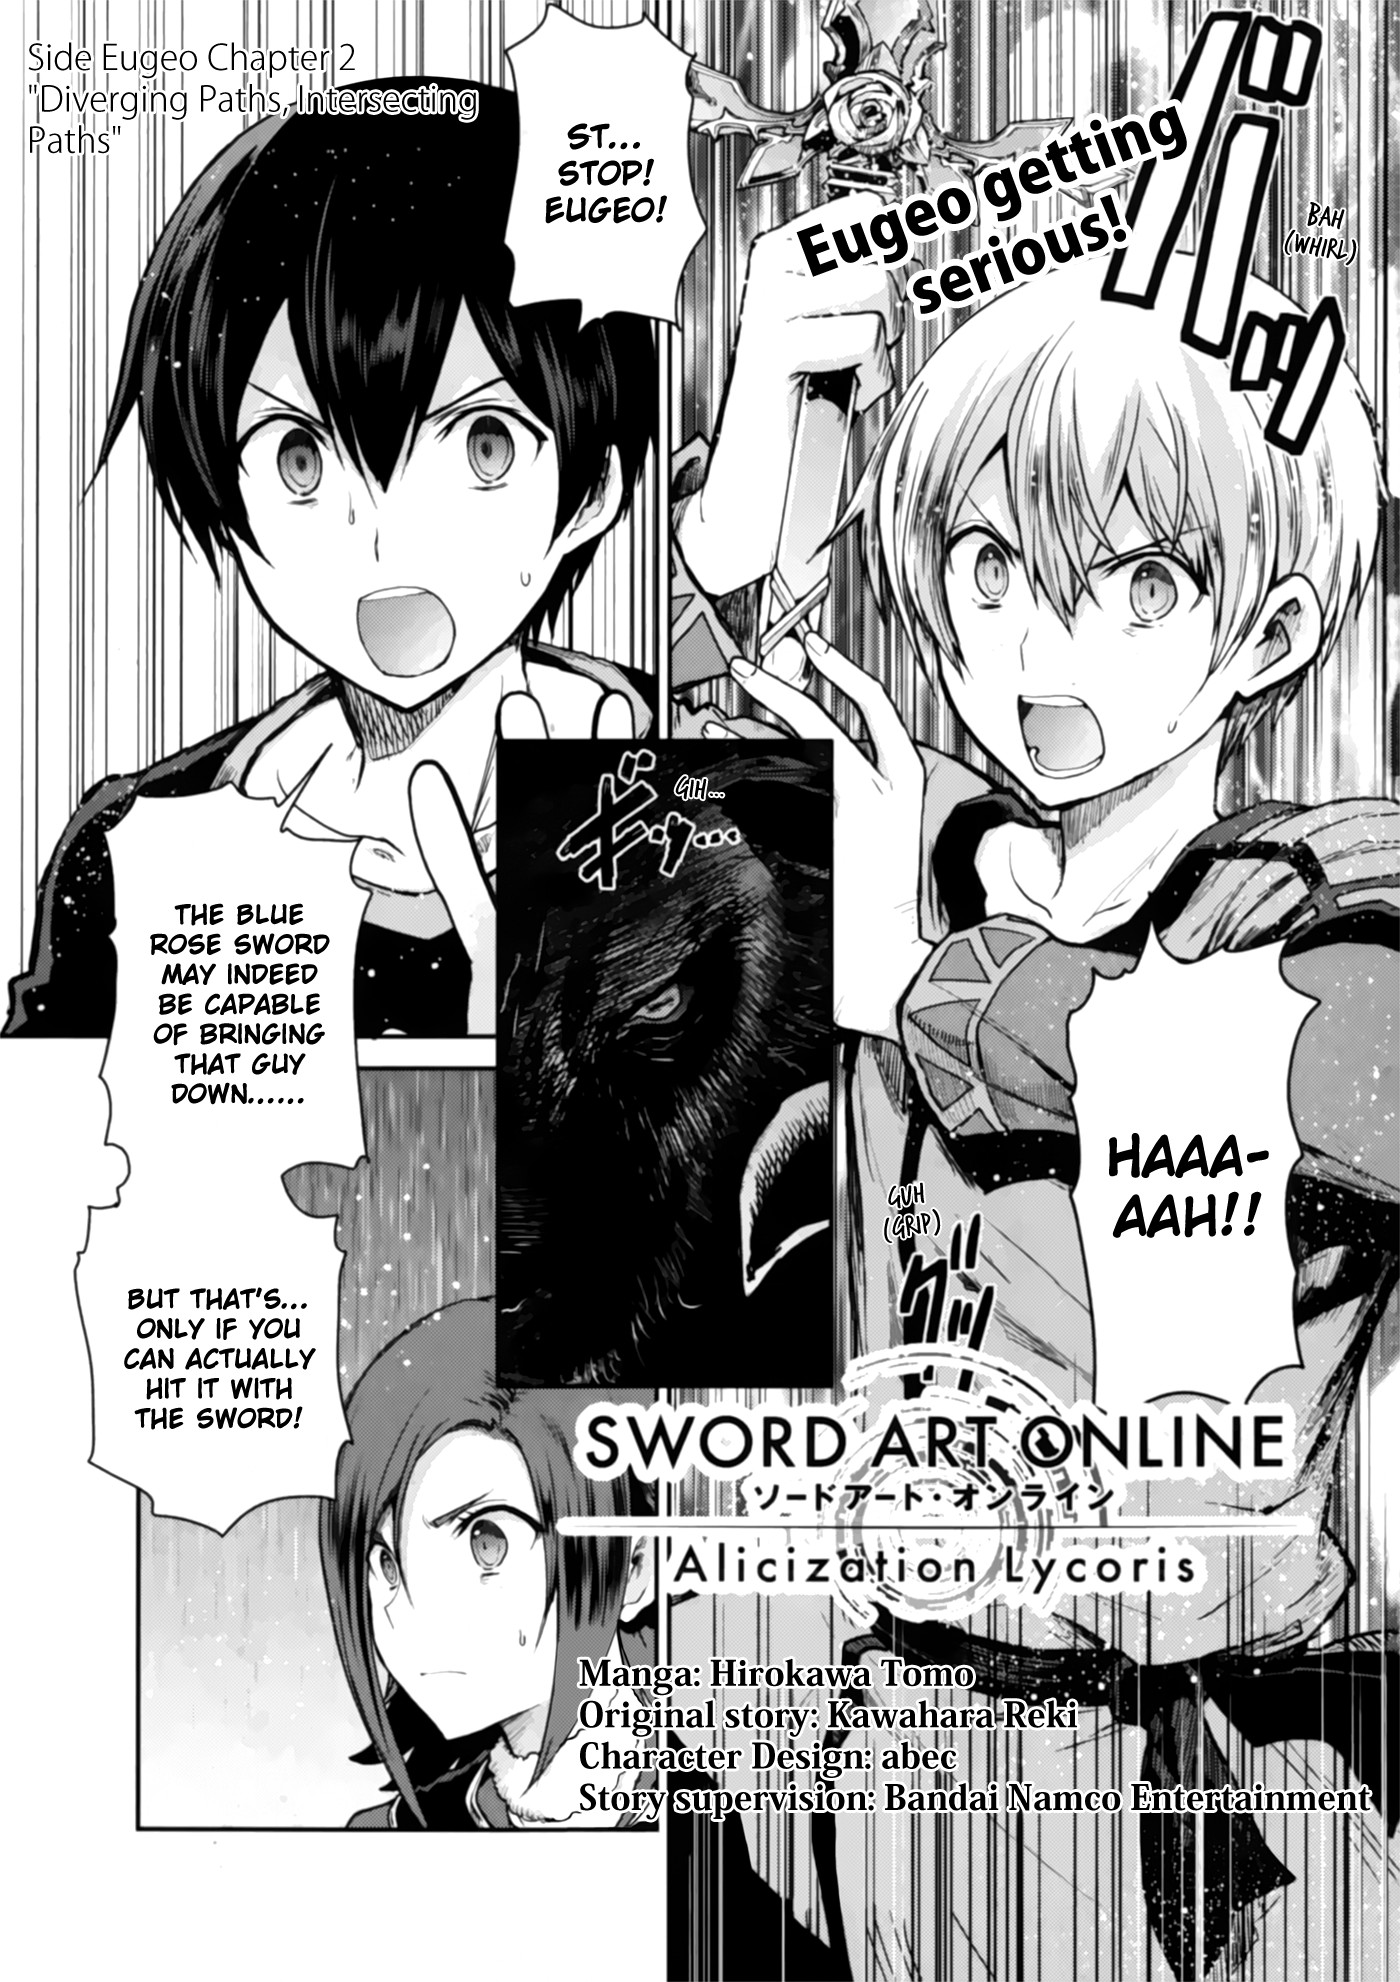 Sword Art Online - Lycoris - Page 1